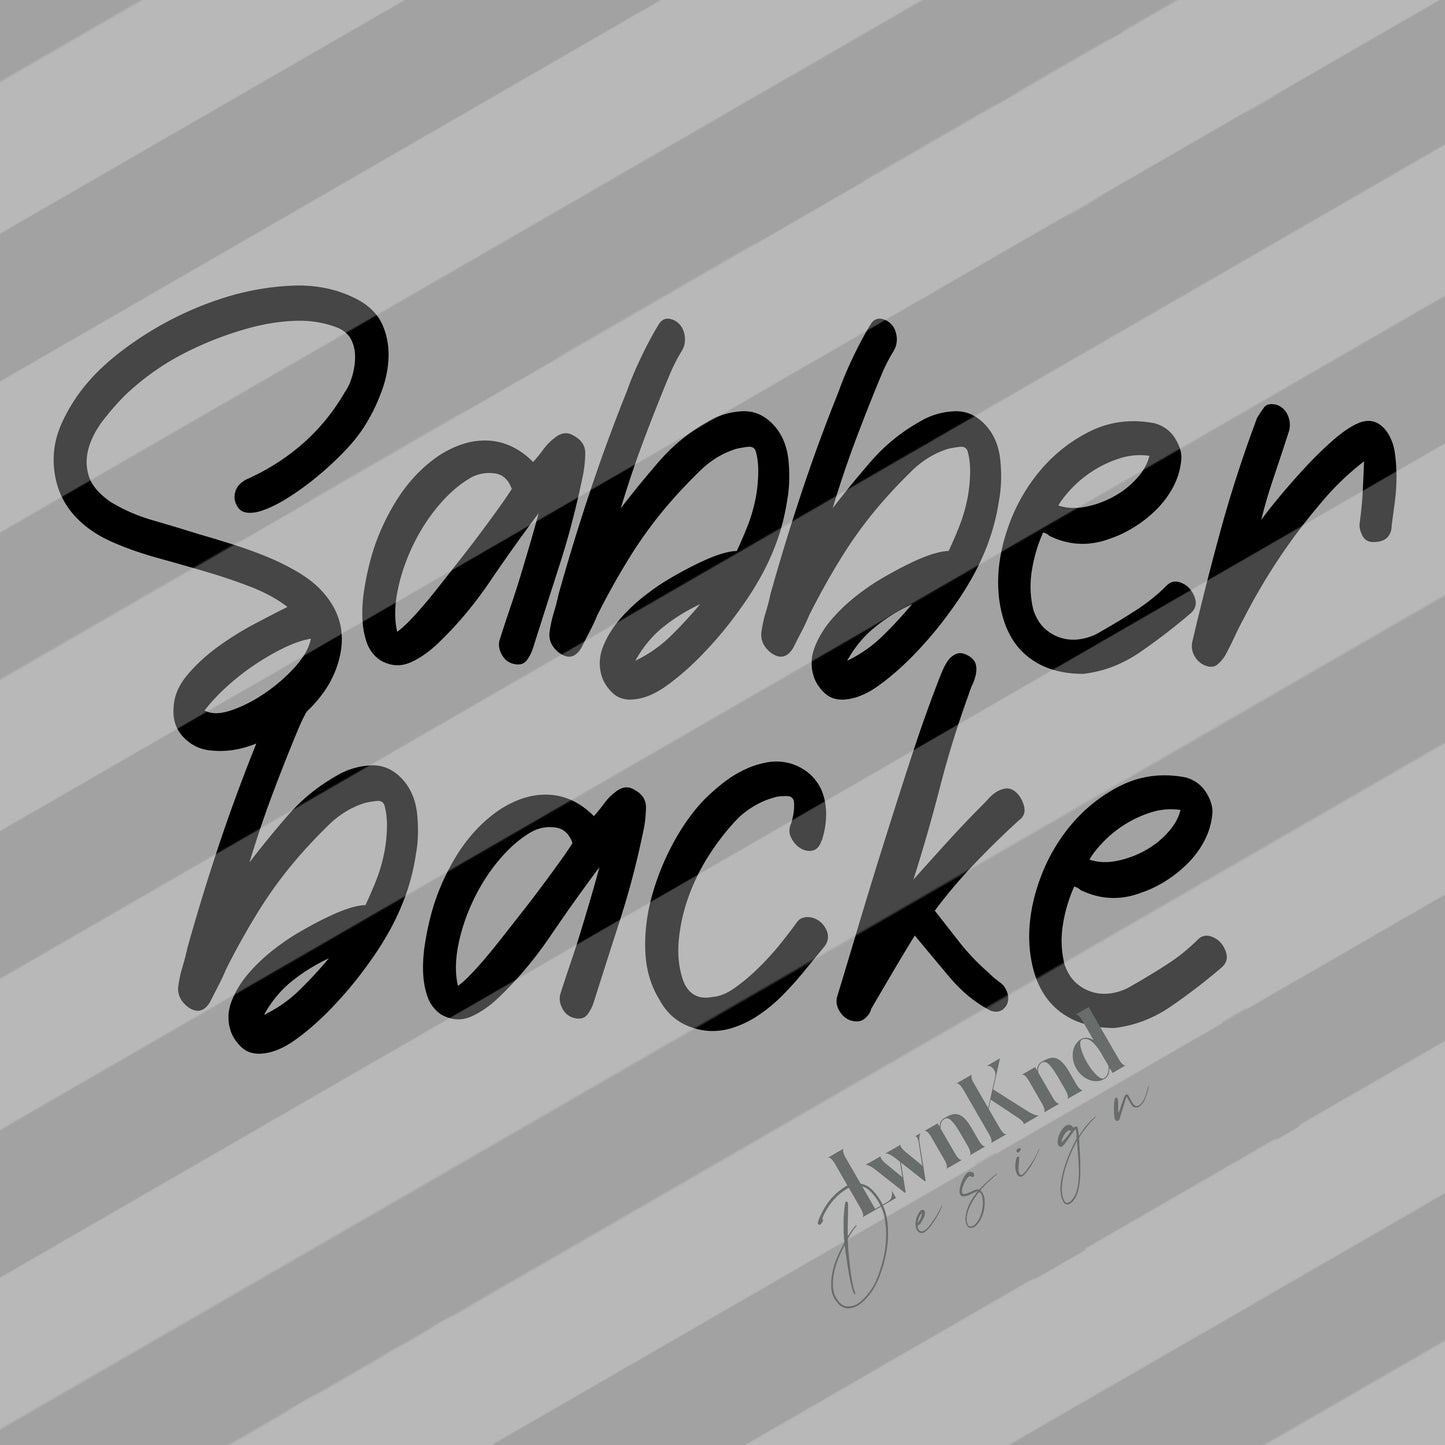 Sabberbacke